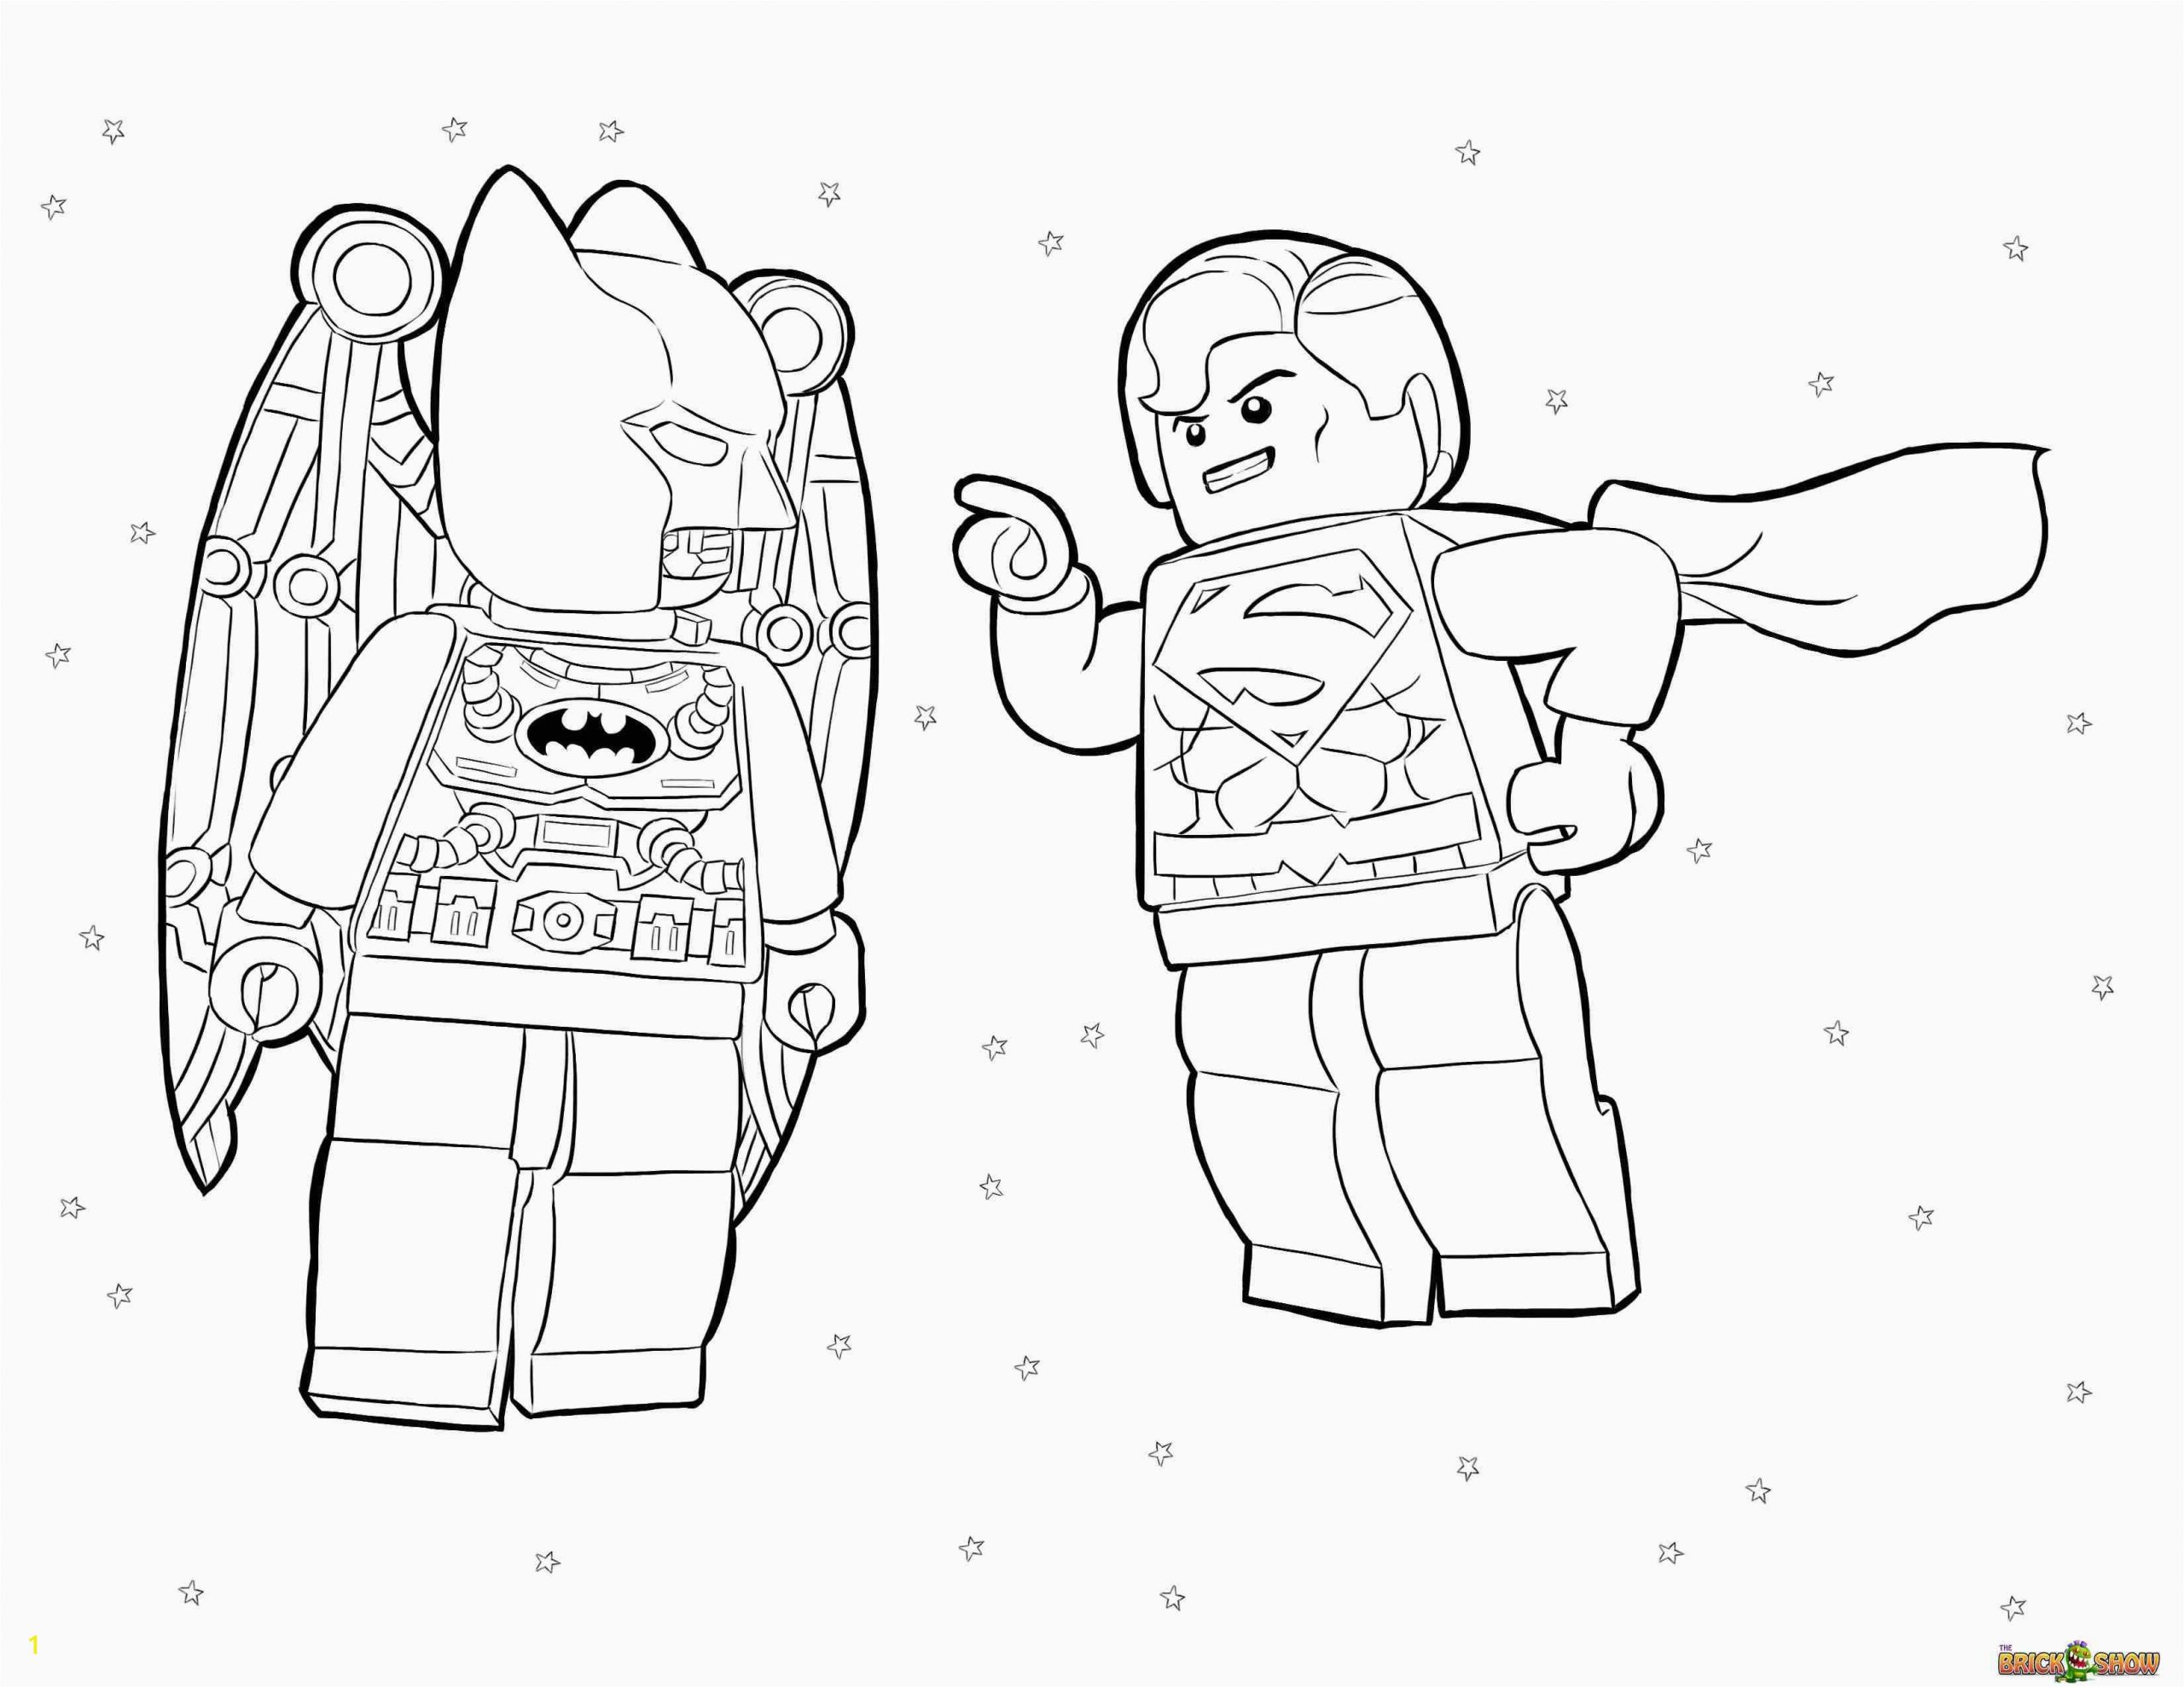 lego batman 2 dc super heroes coloring pages